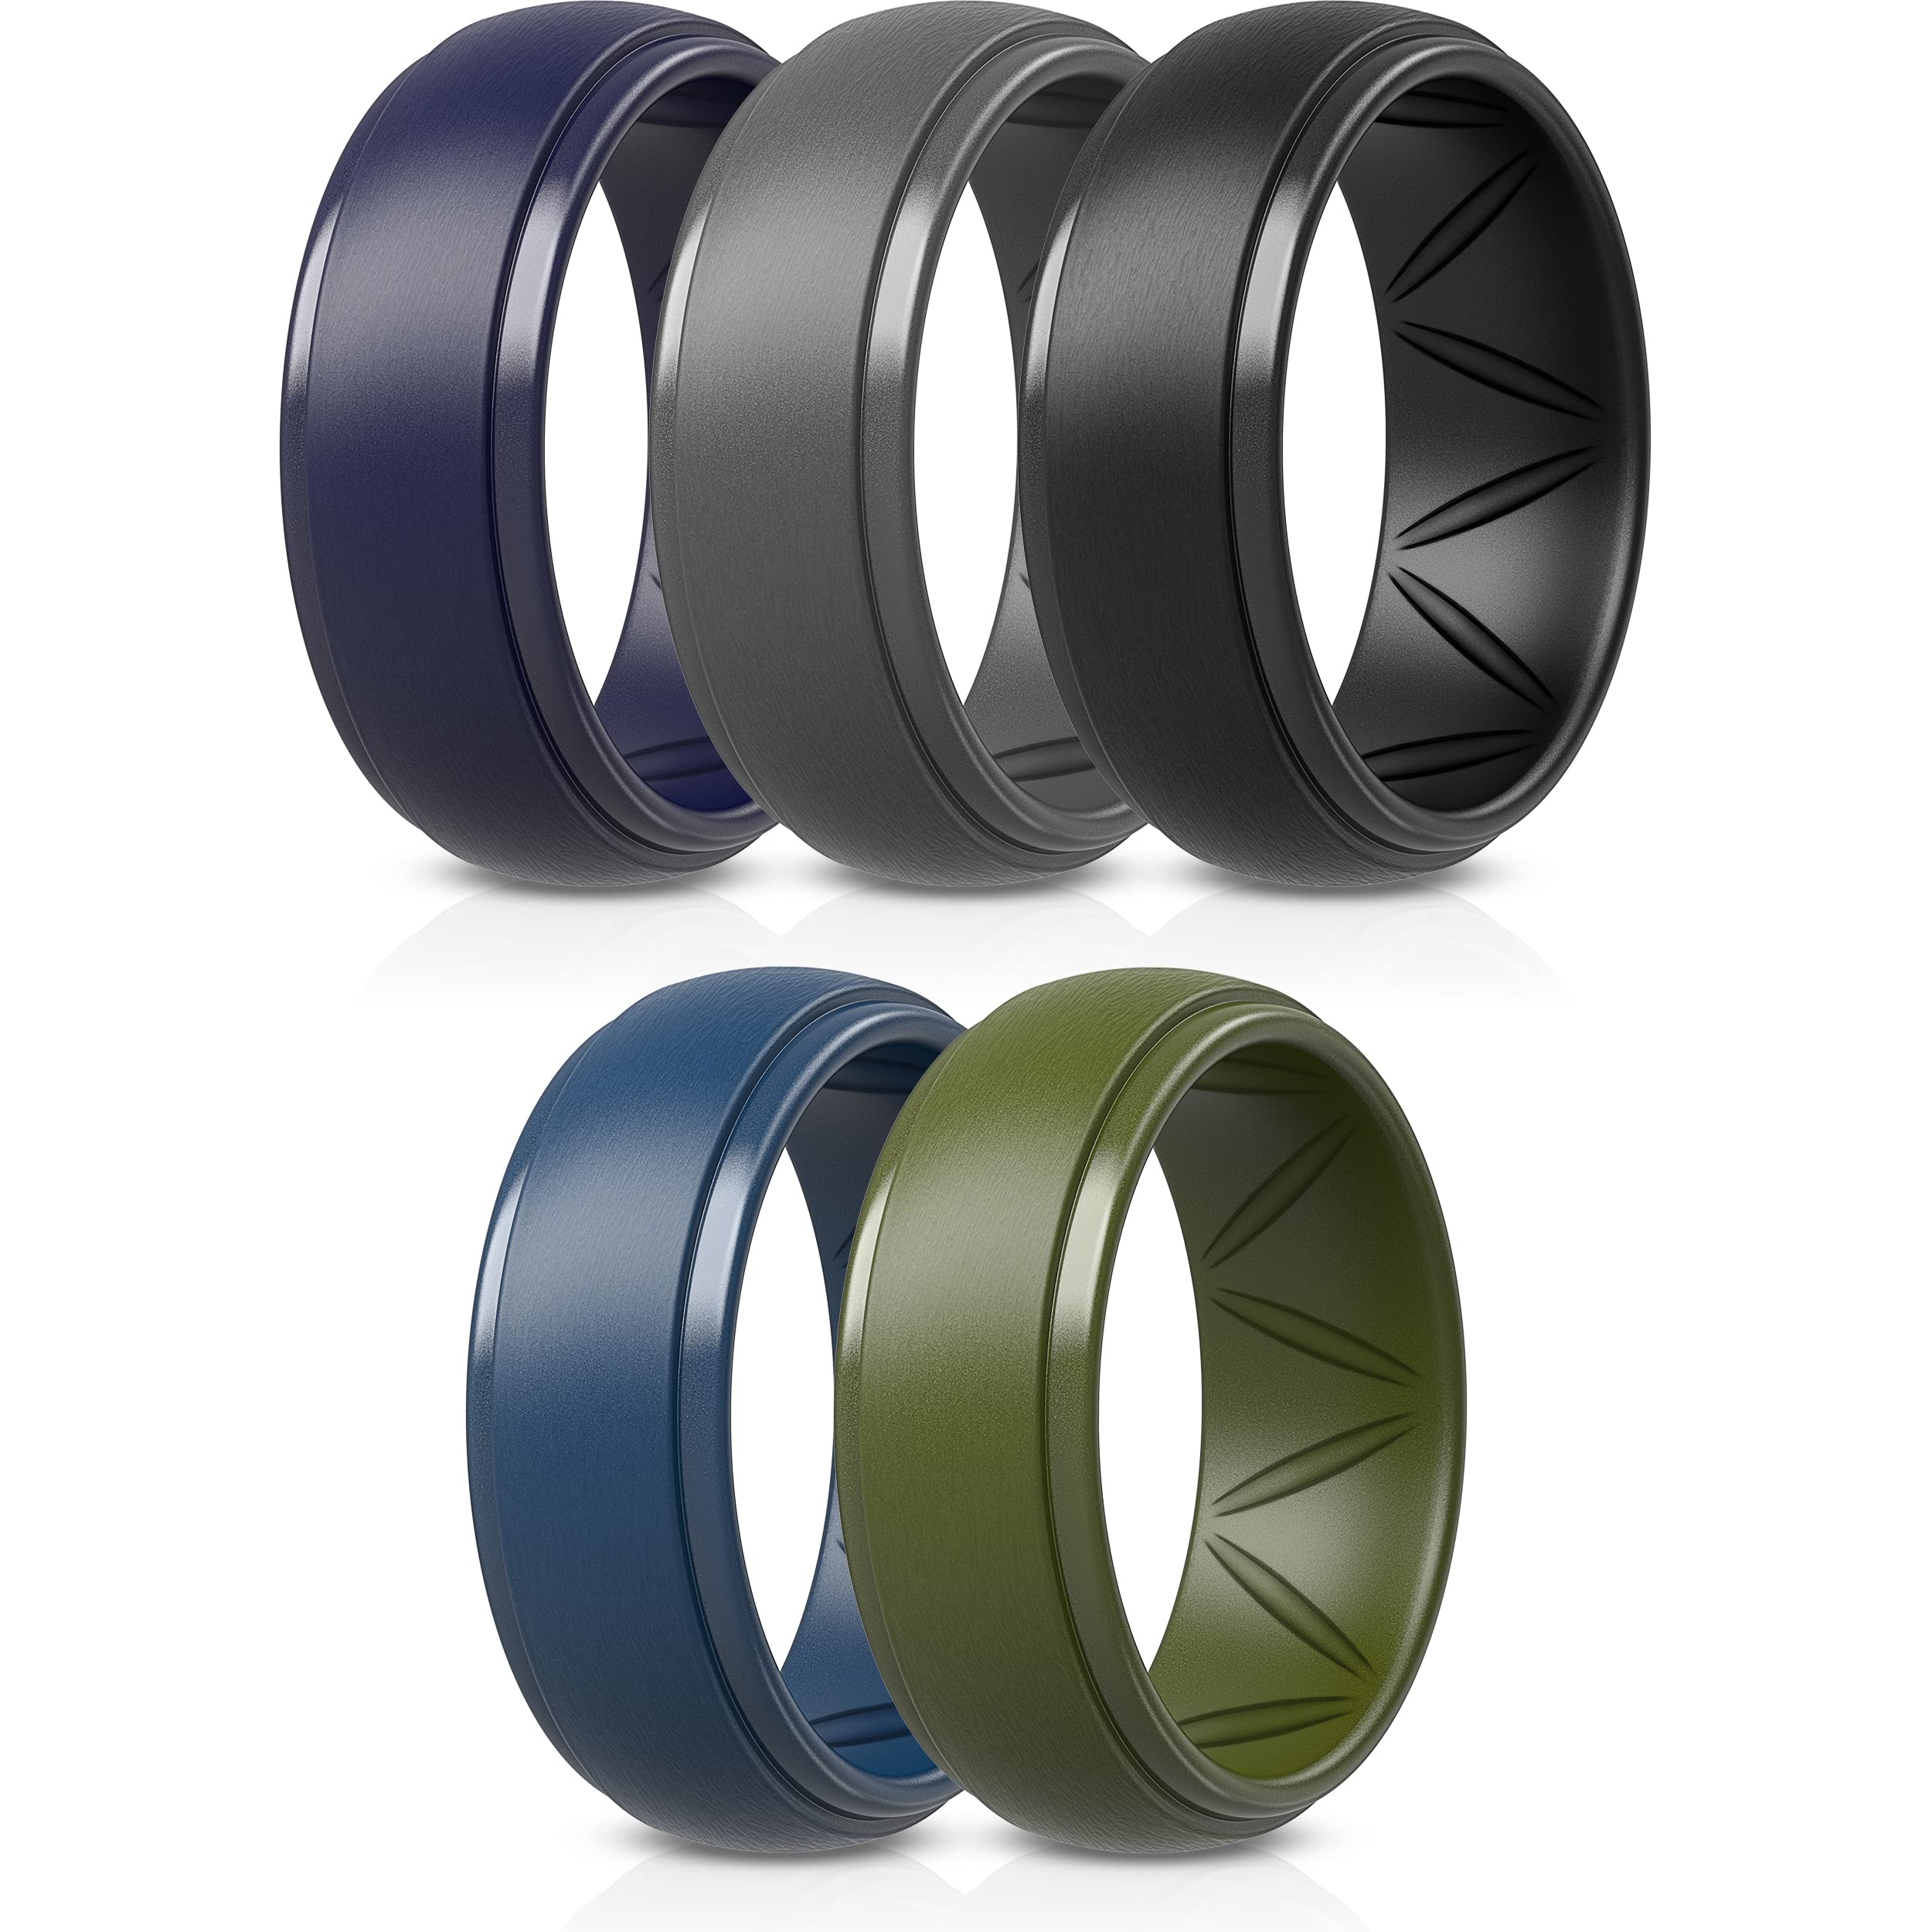 ThunderFit Silicone Rings for Men - Breatheable Airgrooves Step Edge 10mm Wide - 2.5mm Thick (Dark Blue B, Grey B, Black, Dark B